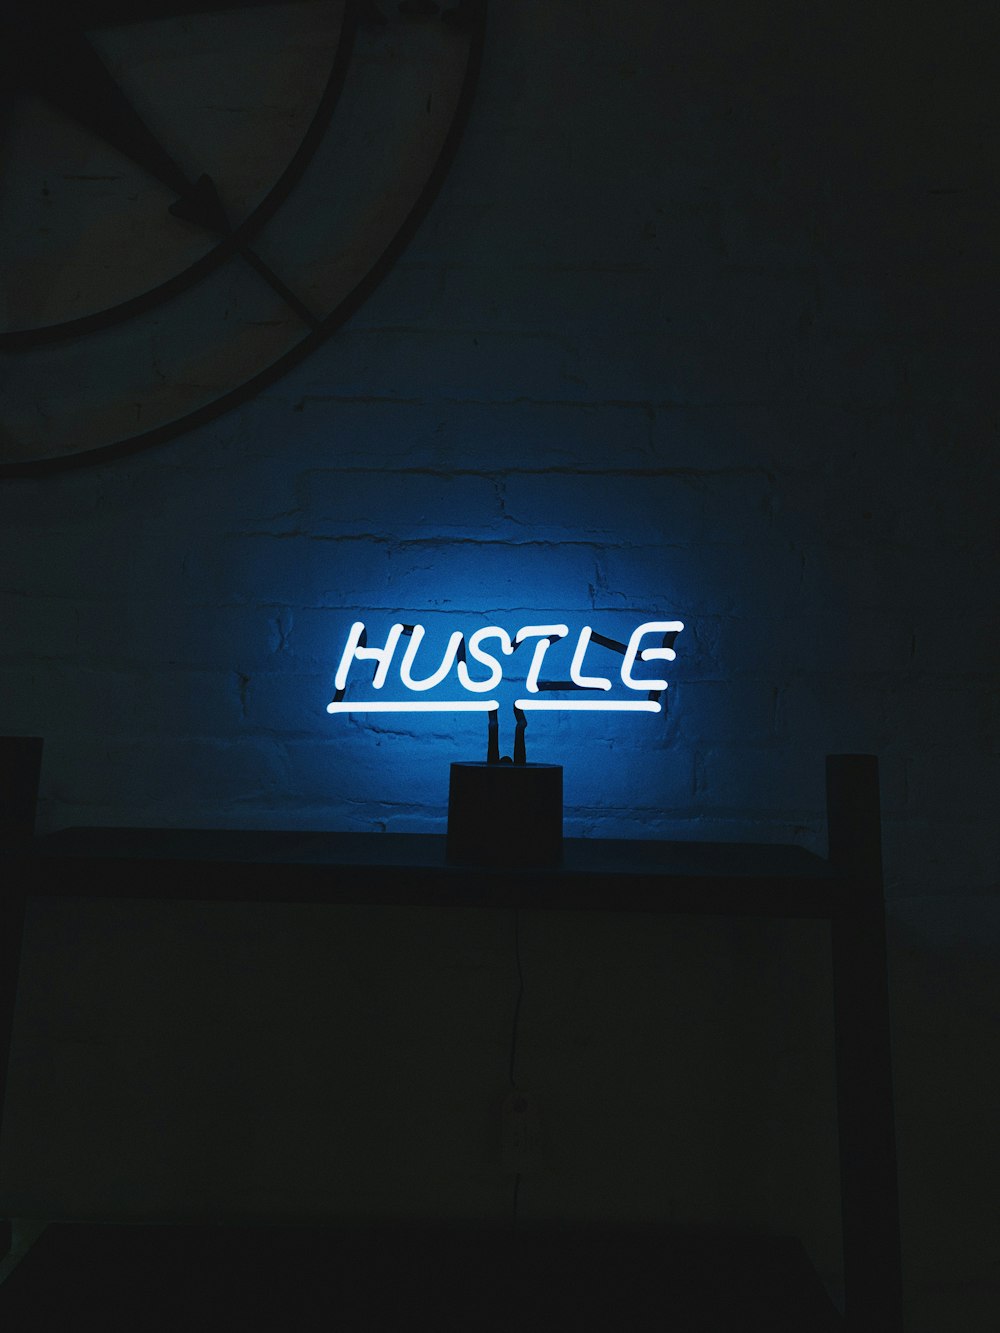 hustle LED signage turned on